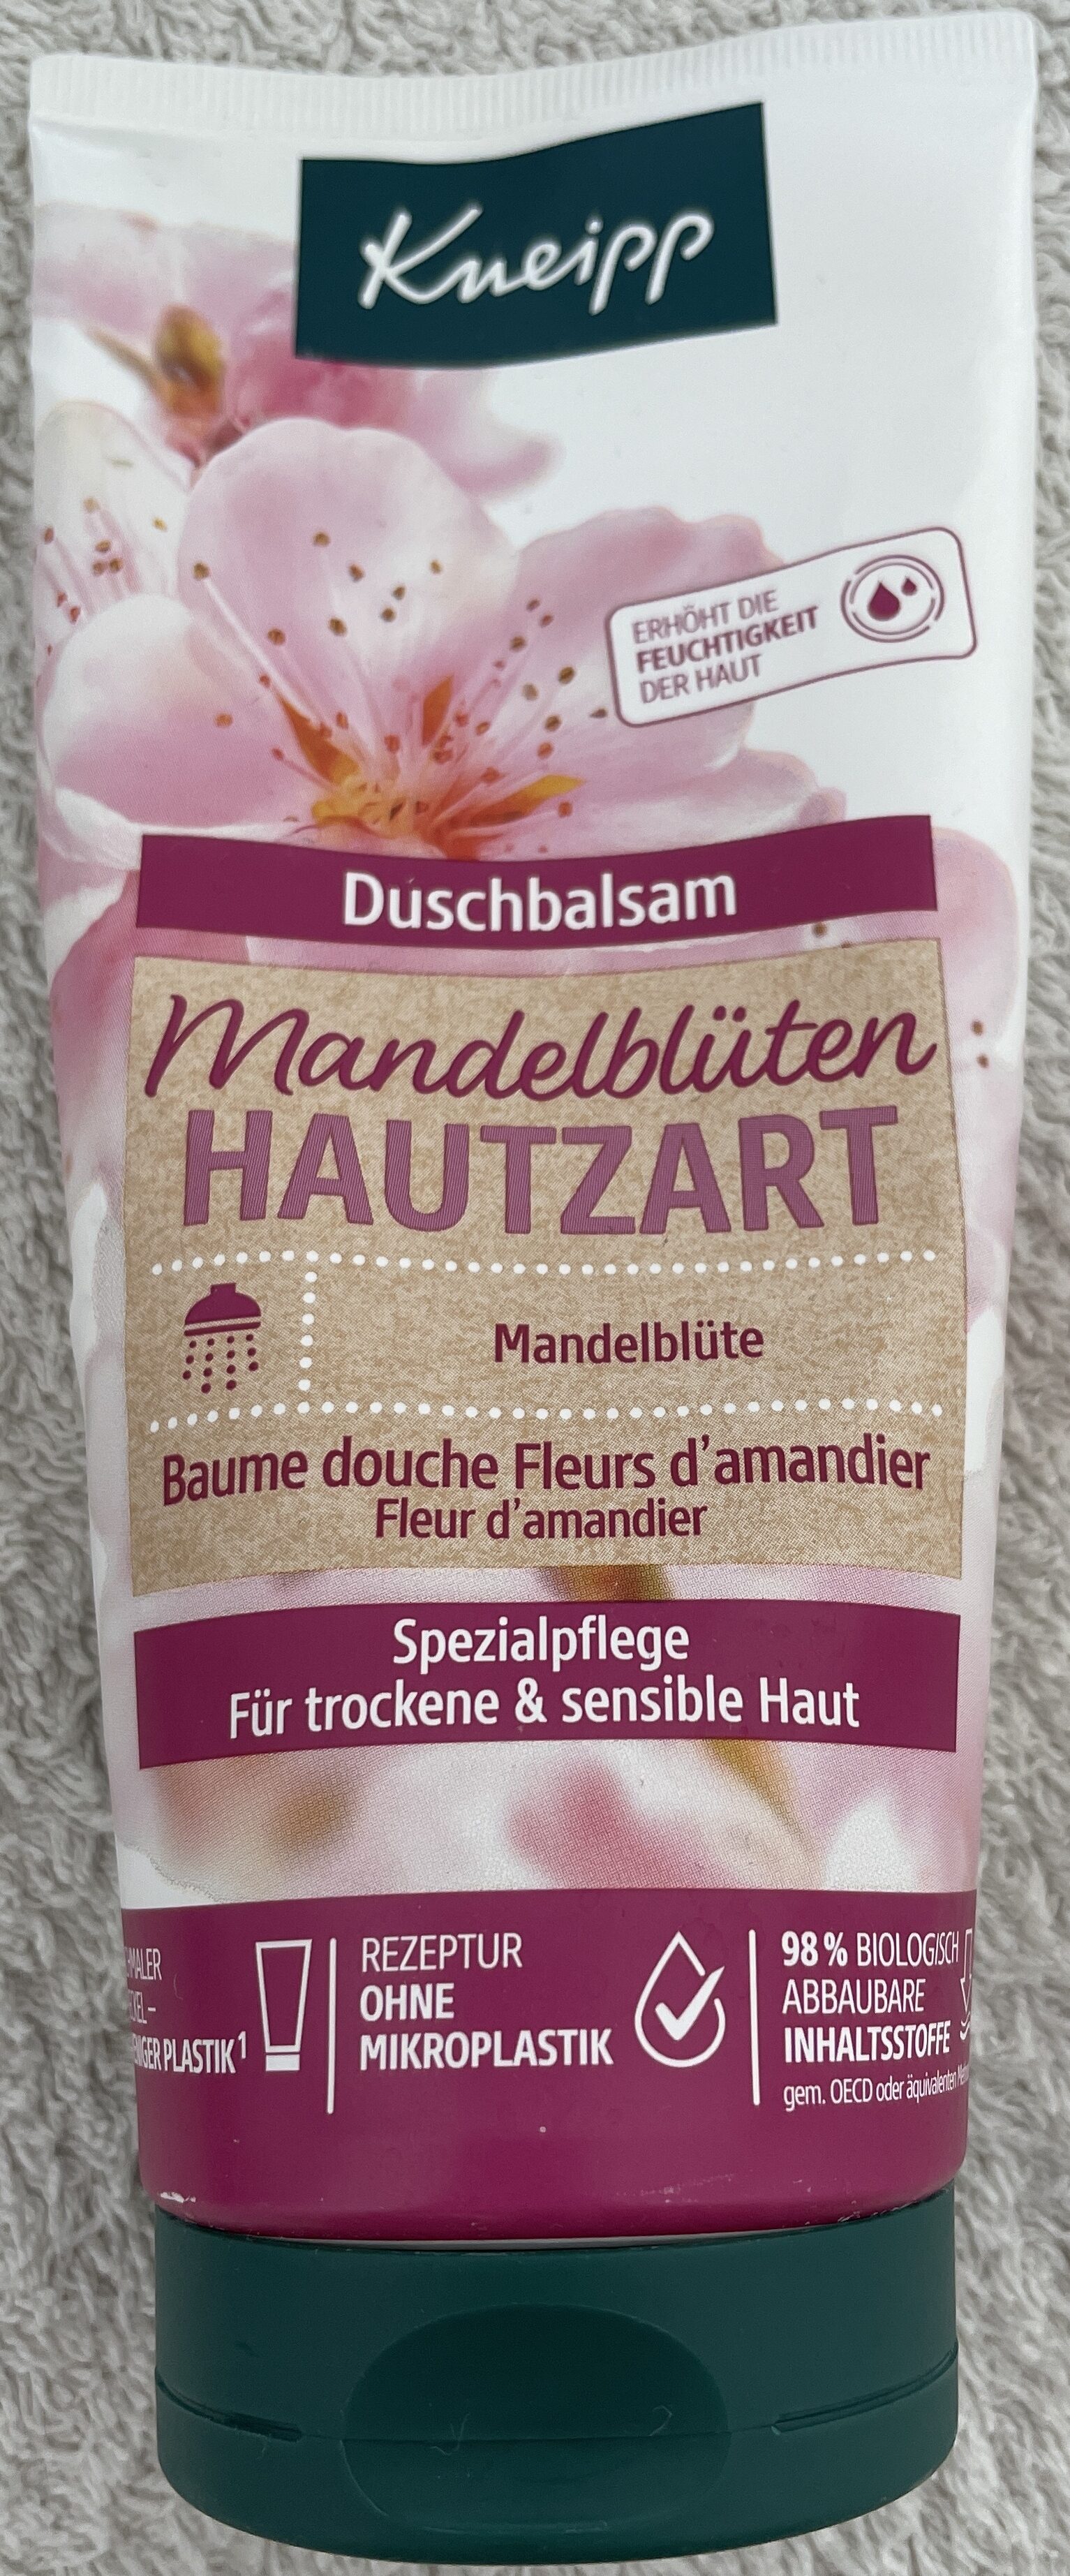 Mandelblüten Hautzart - מוצר - de